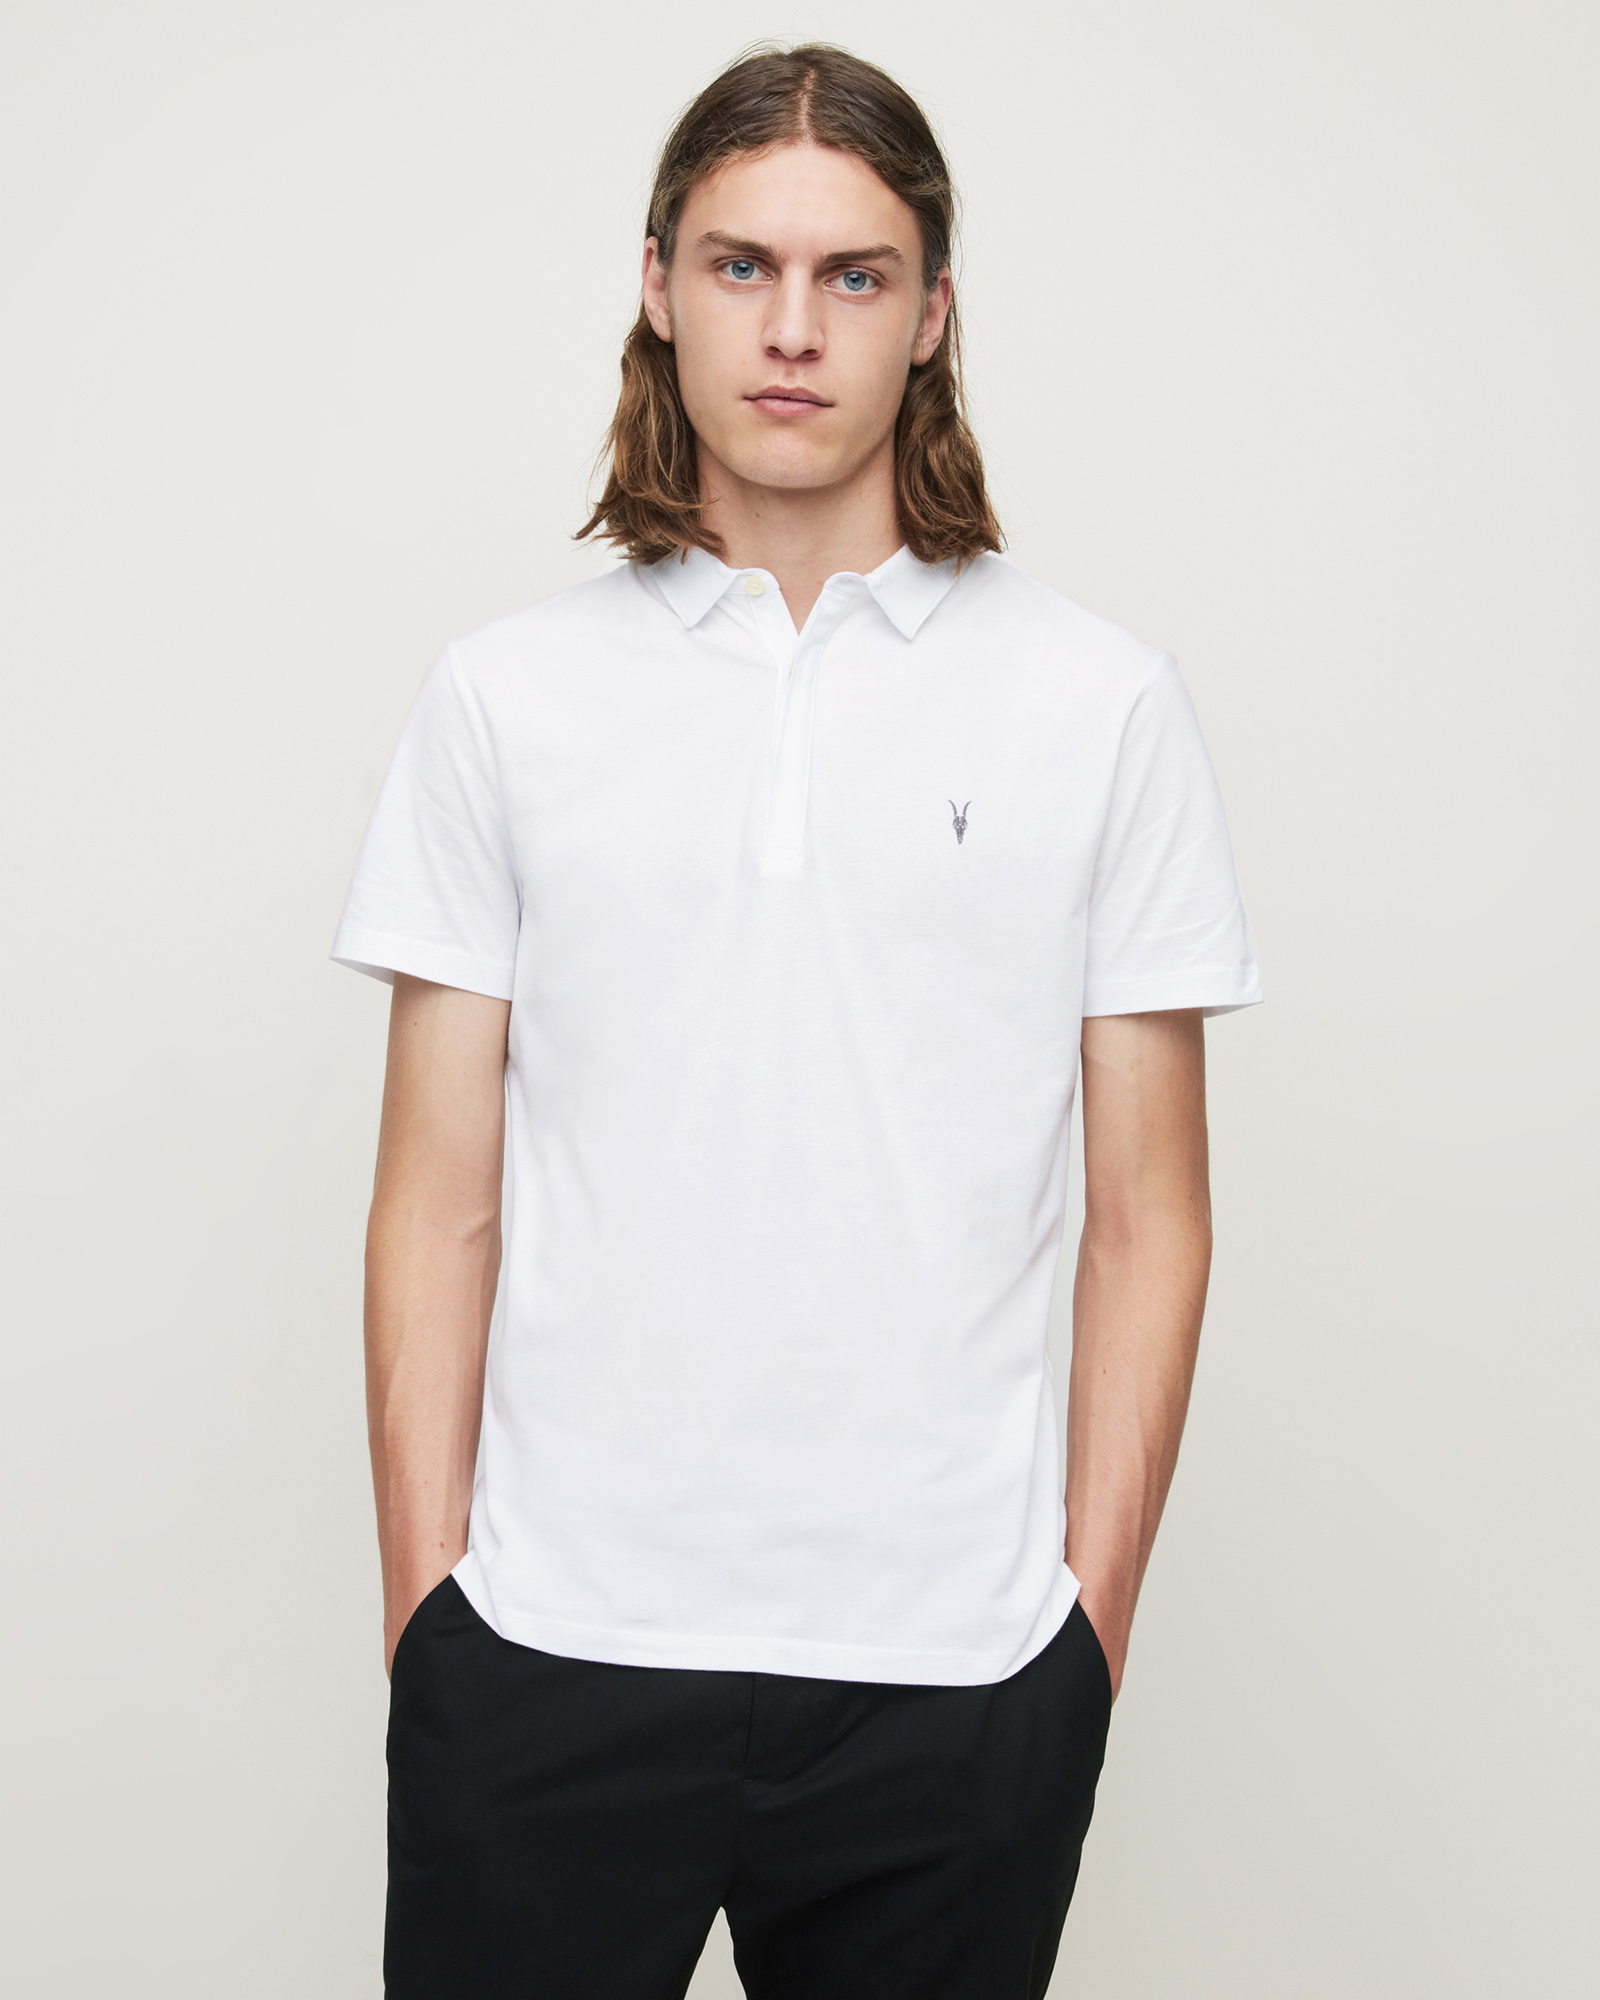 AllSaints Men's Cotton Regular Fit Brace Short Sleeve Polo Shirt, White, Size: XS